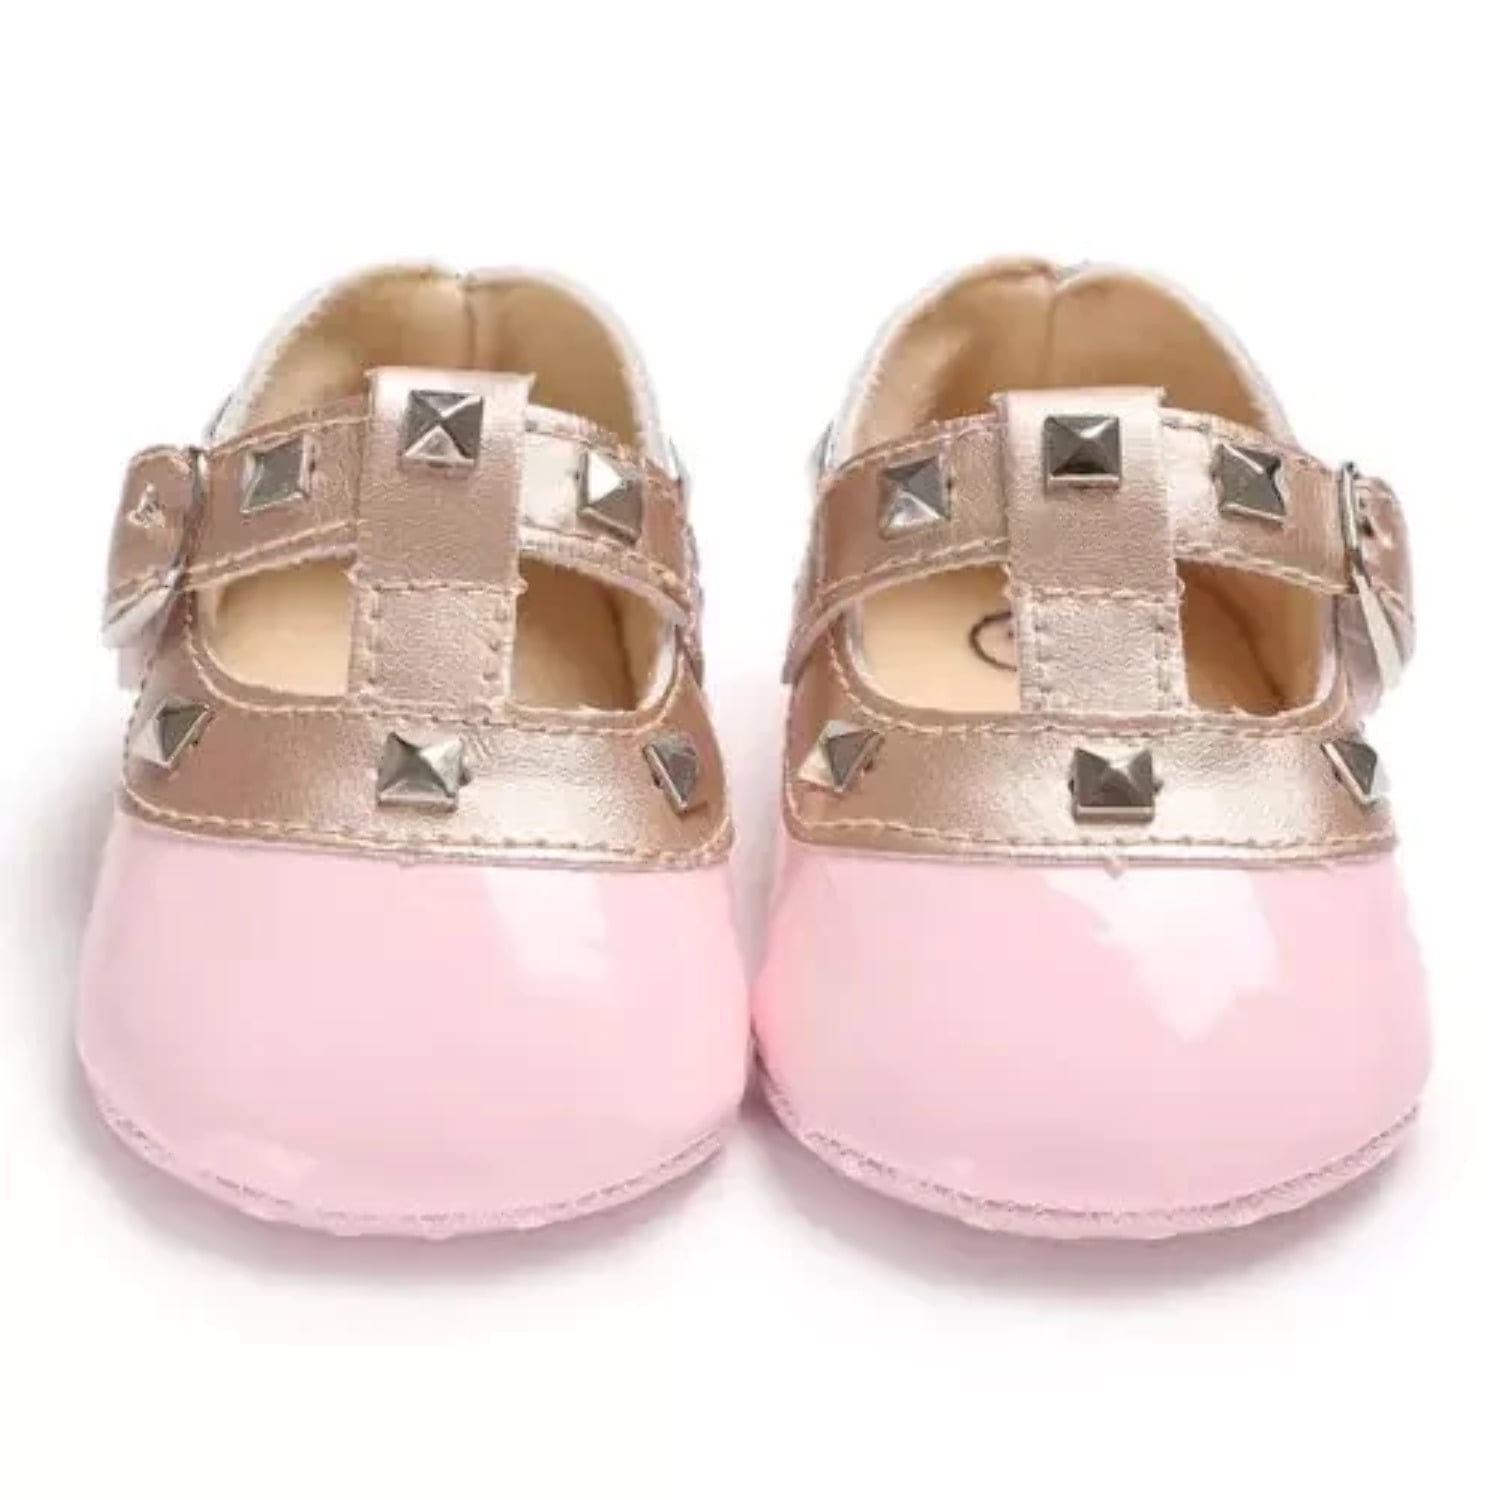 Fancy Baby Shoes - Walmart.com